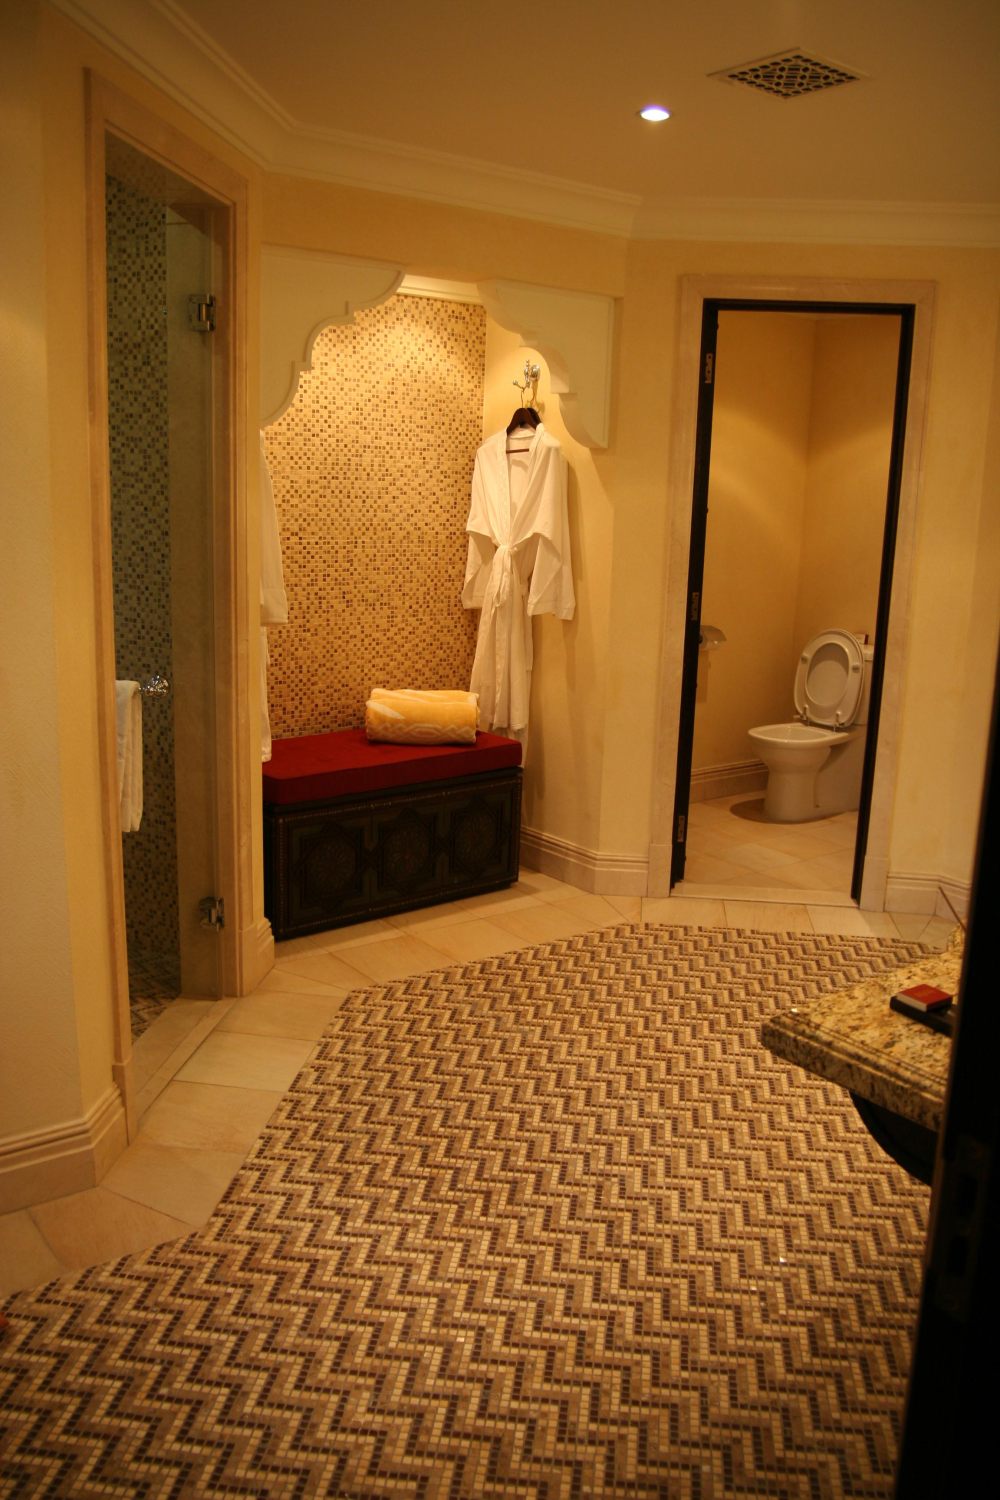 迪拜卓美亚 Dar Al Masyaf 酒店--2012.04.26更新自拍_IMG_0396.JPG